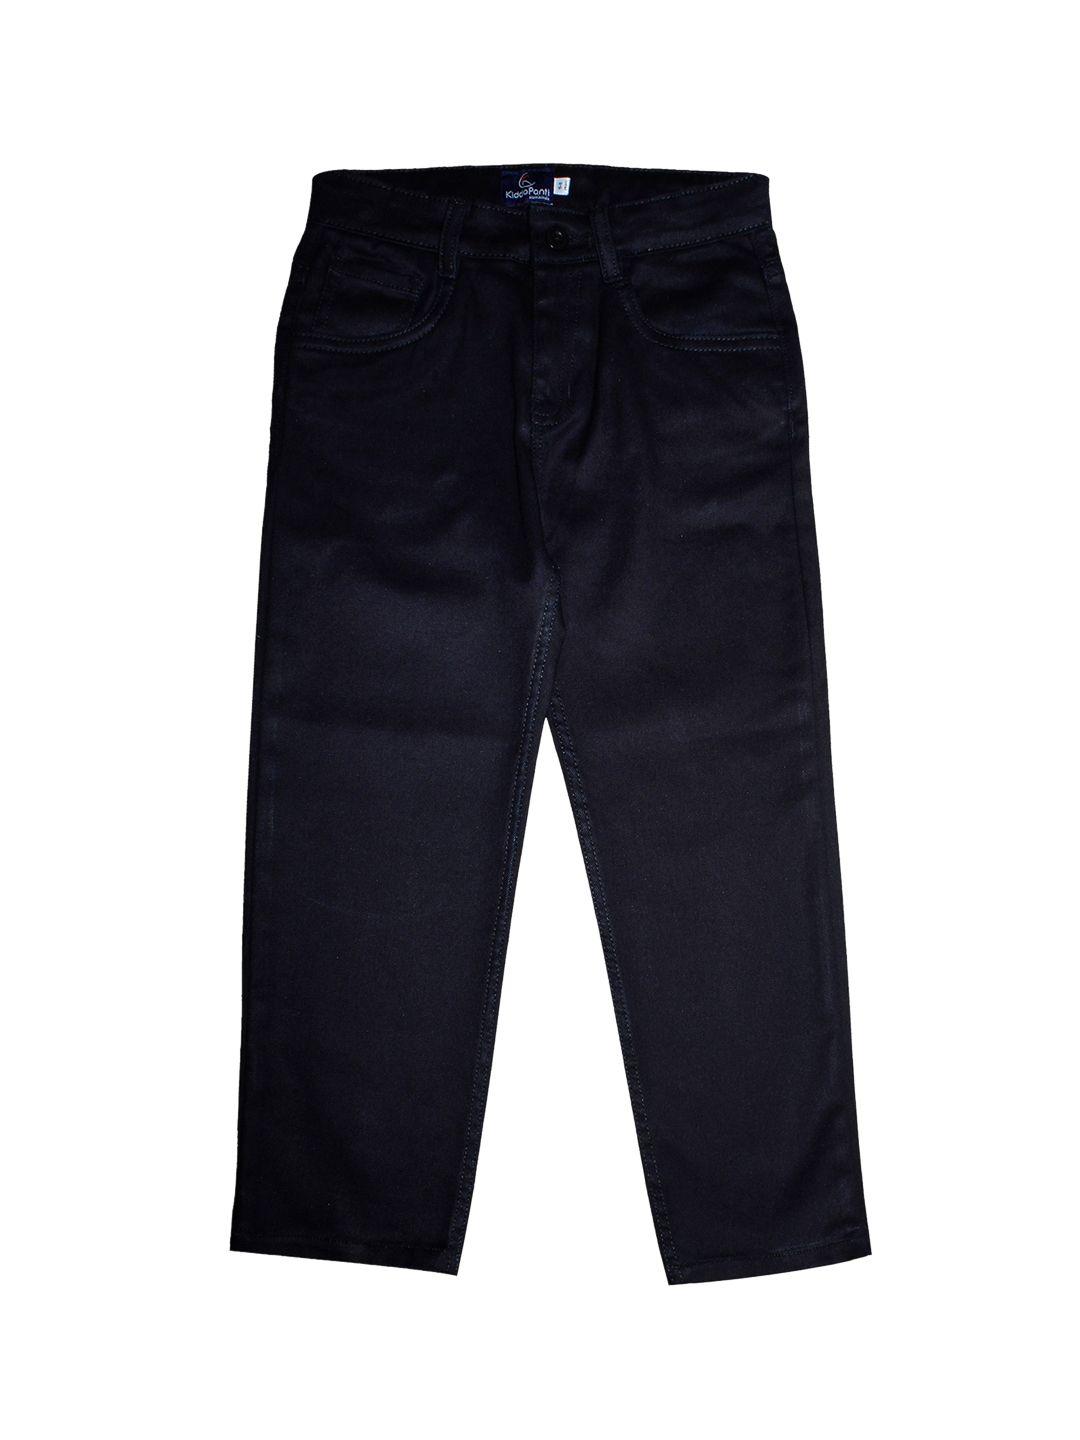 kiddopanti-boys-black-regular-fit-casual-trousers